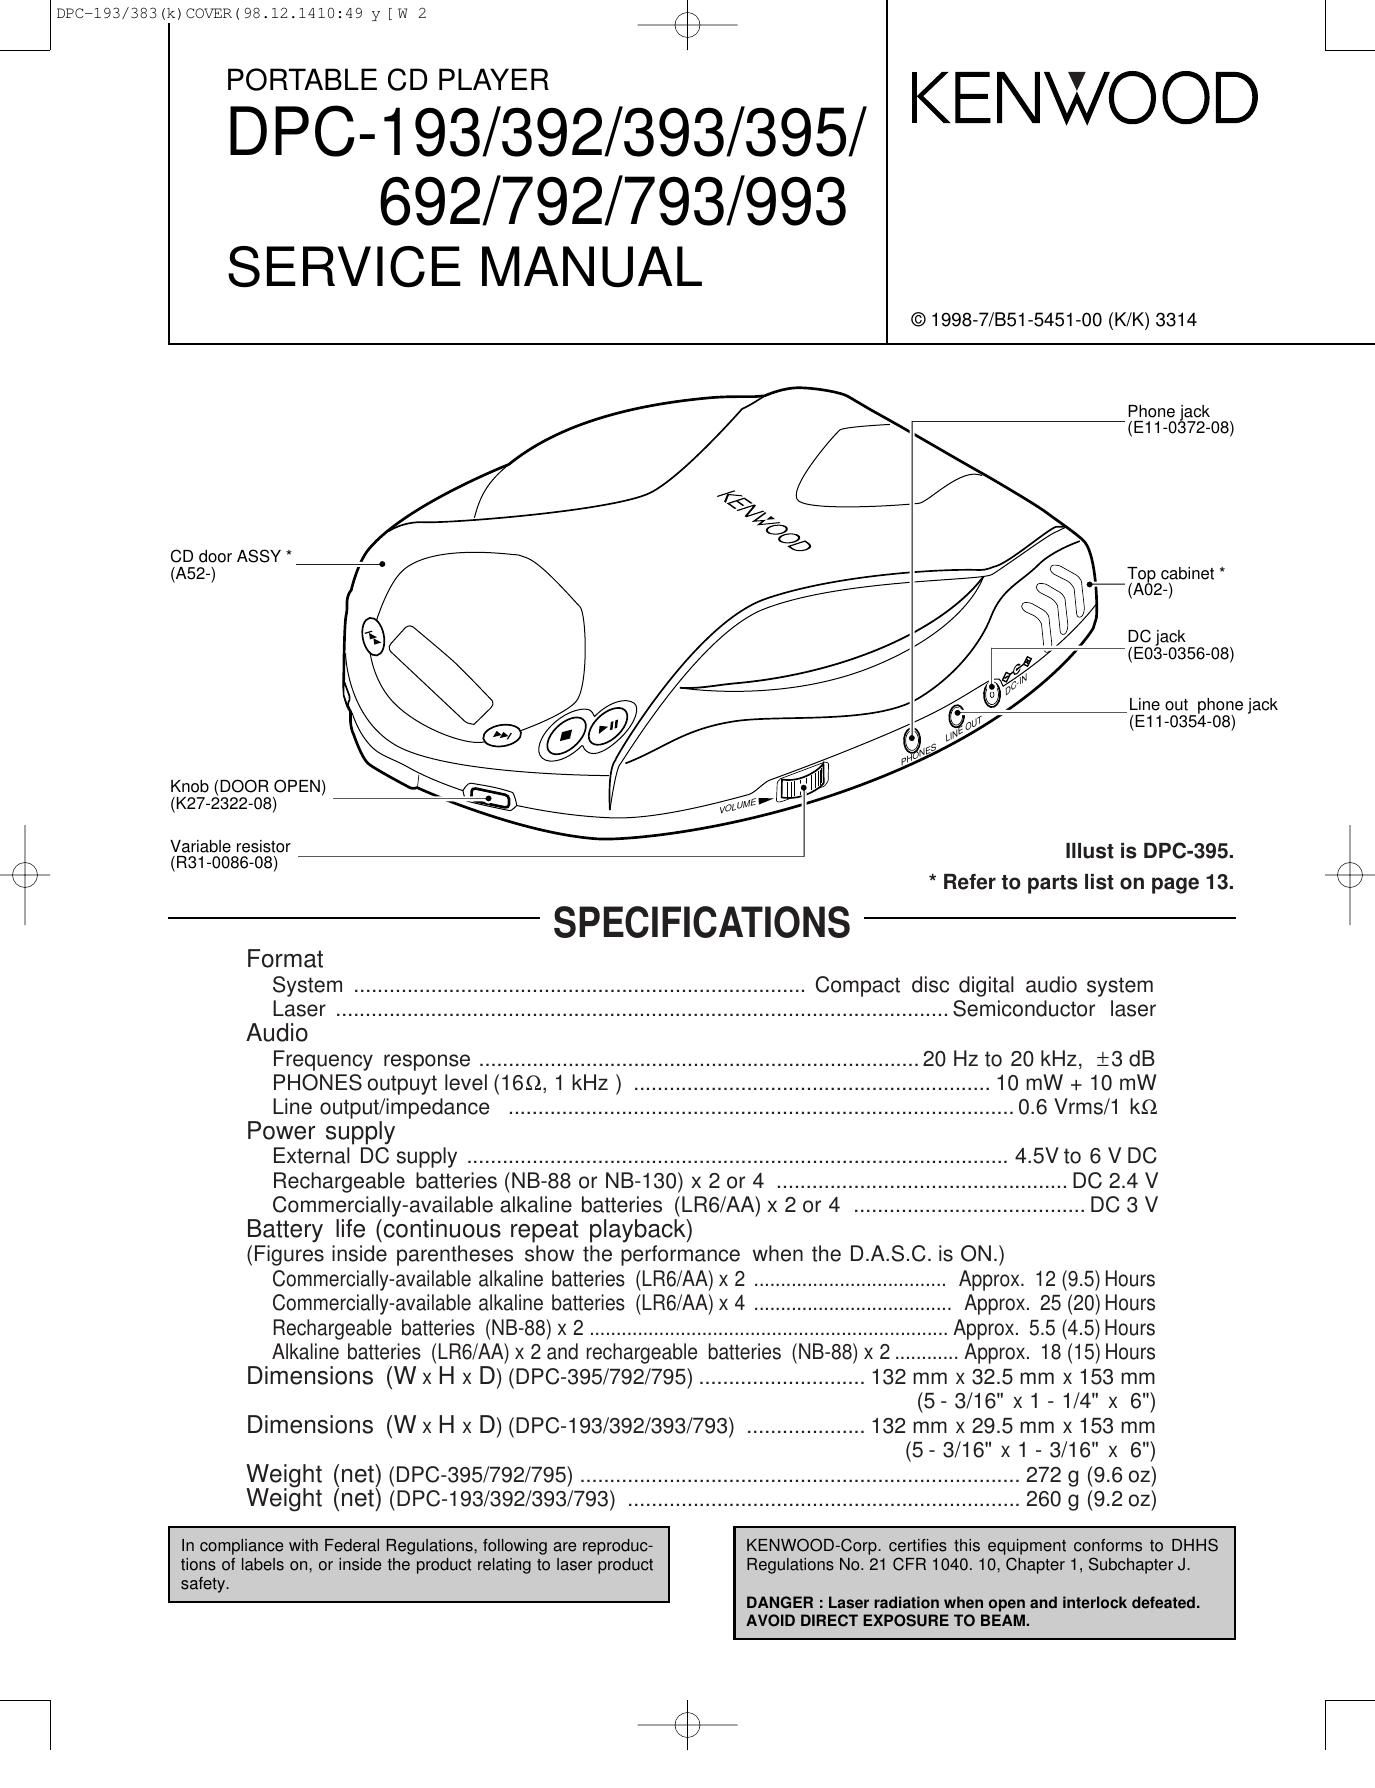 Kenwood DPC 393 Service Manual